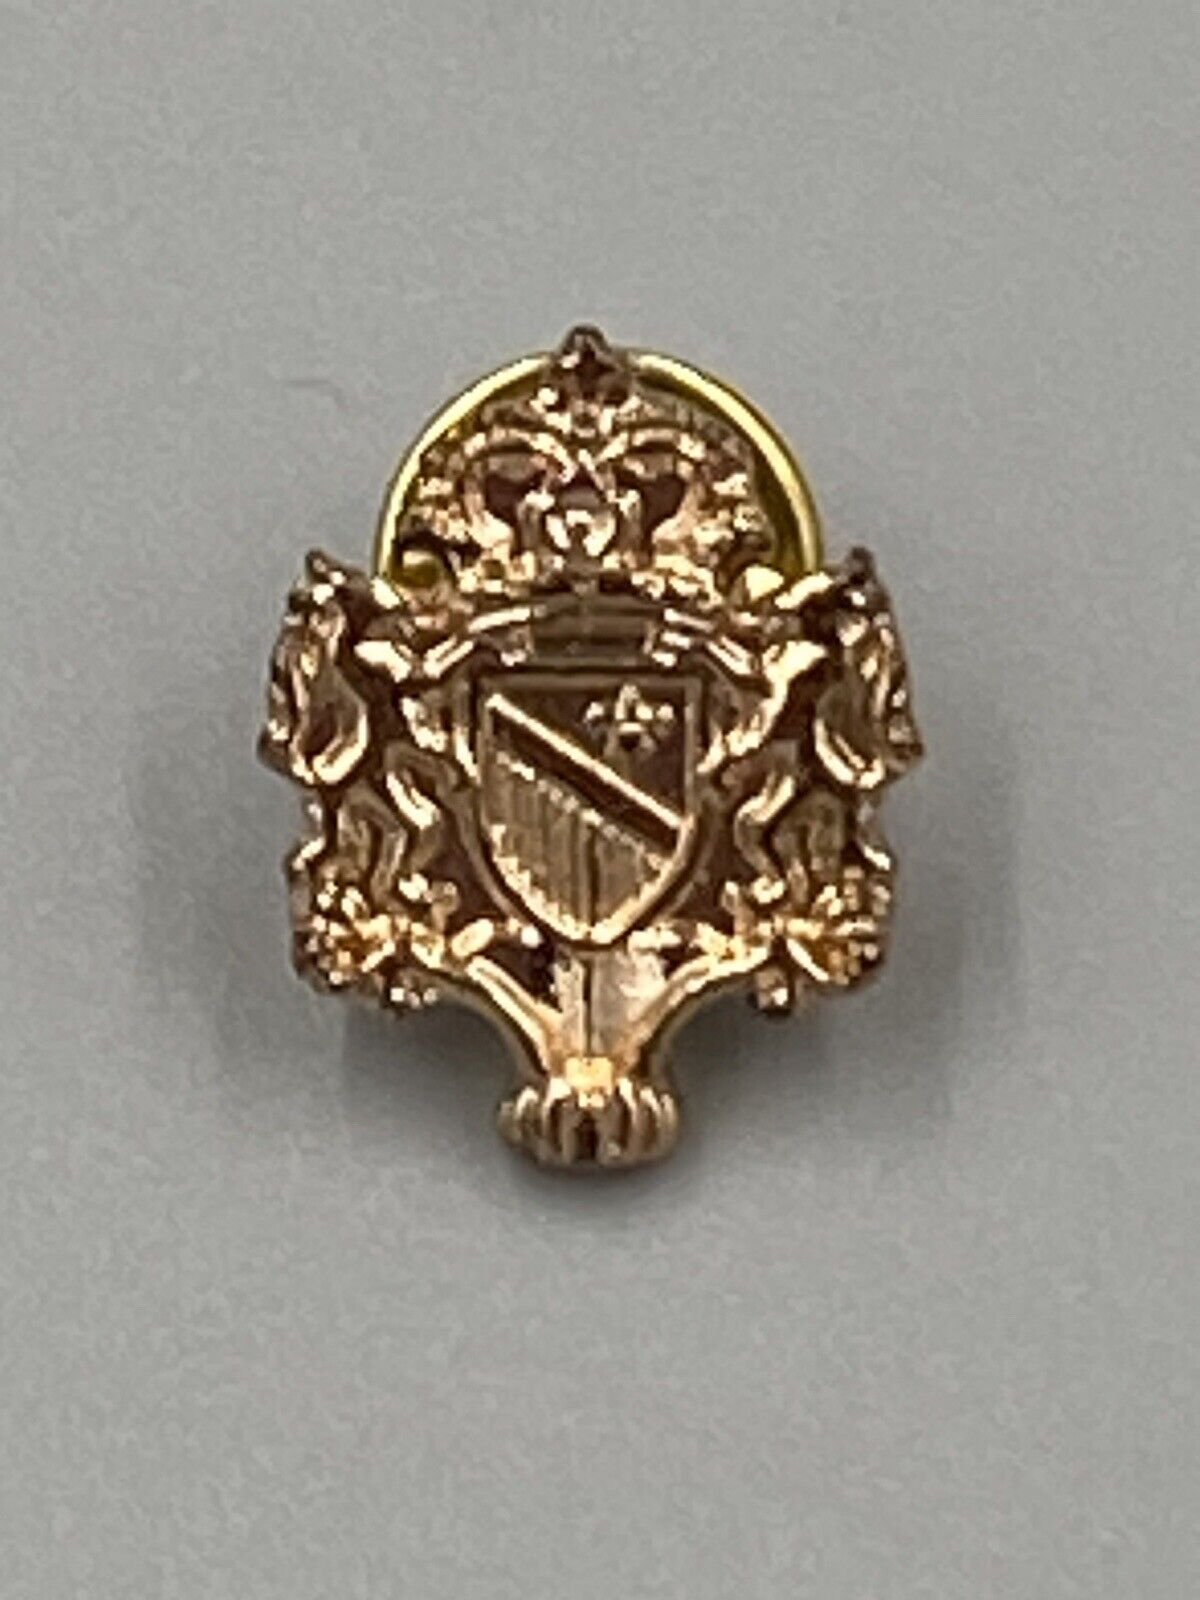 Vintage Gold Colored Crest Regal Royal Style Lapel Pin